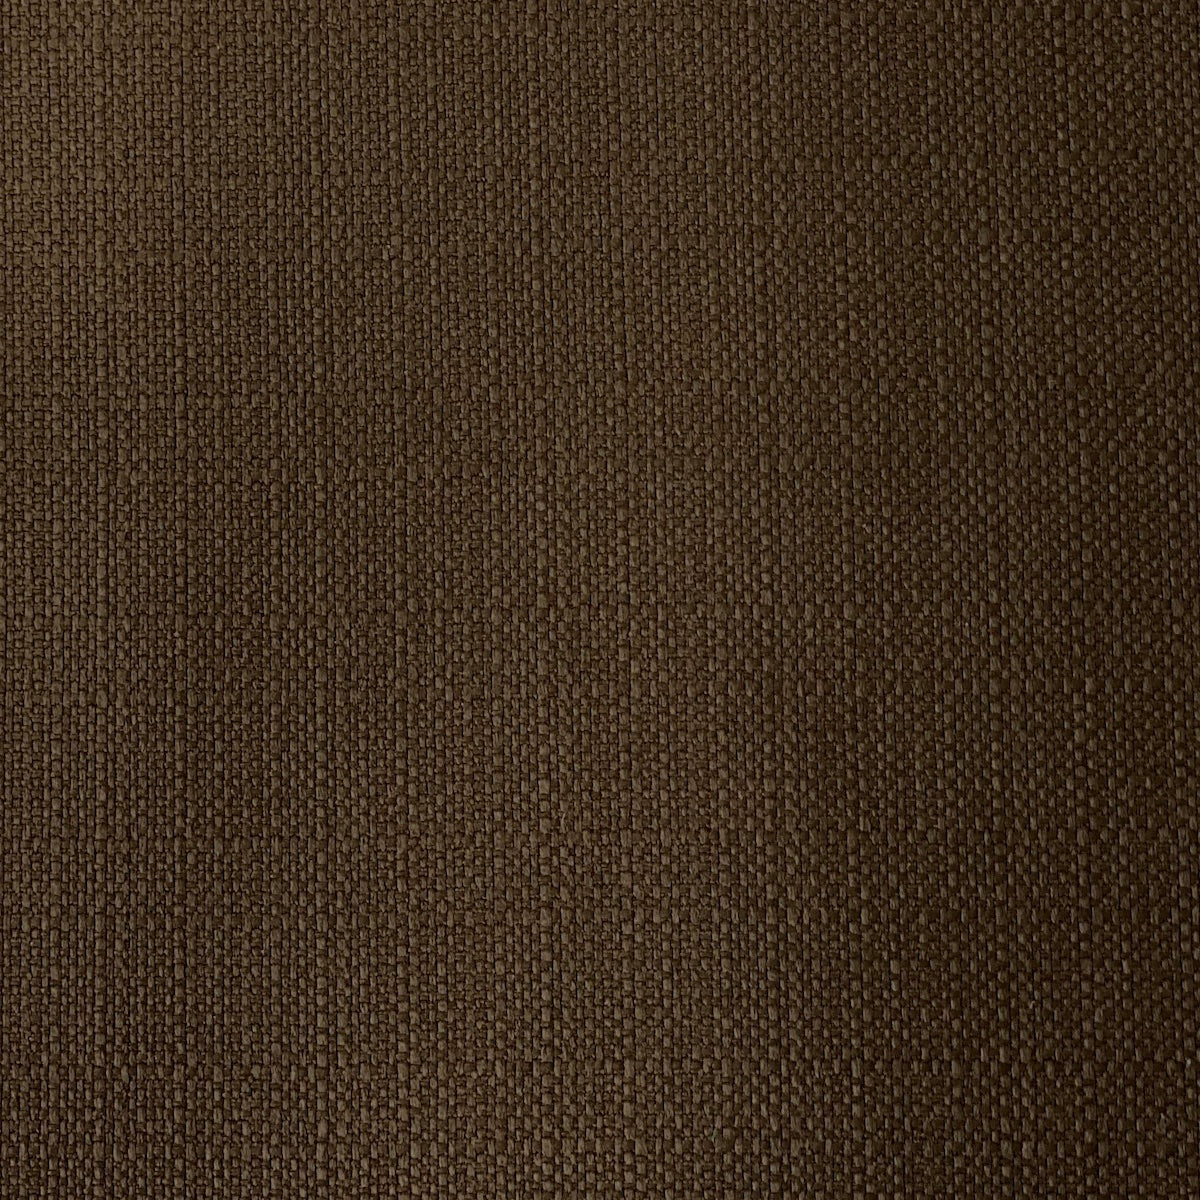 Chocolate Brown Breda Linen Upholstery Drapery Fabric - Fashion Fabrics LLC